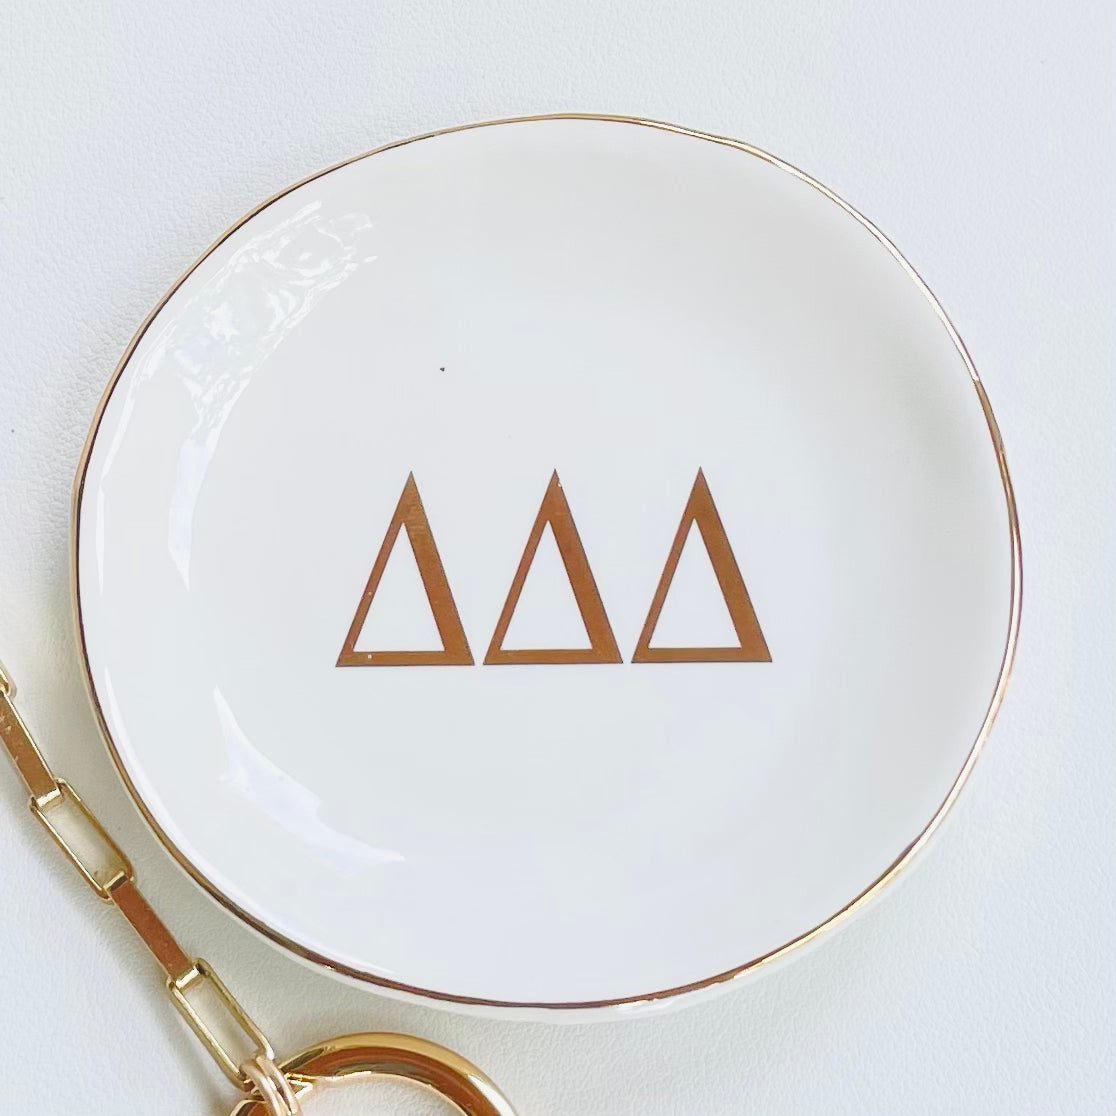 Delta Delta Delta Sorority Ring Dish with gold trim